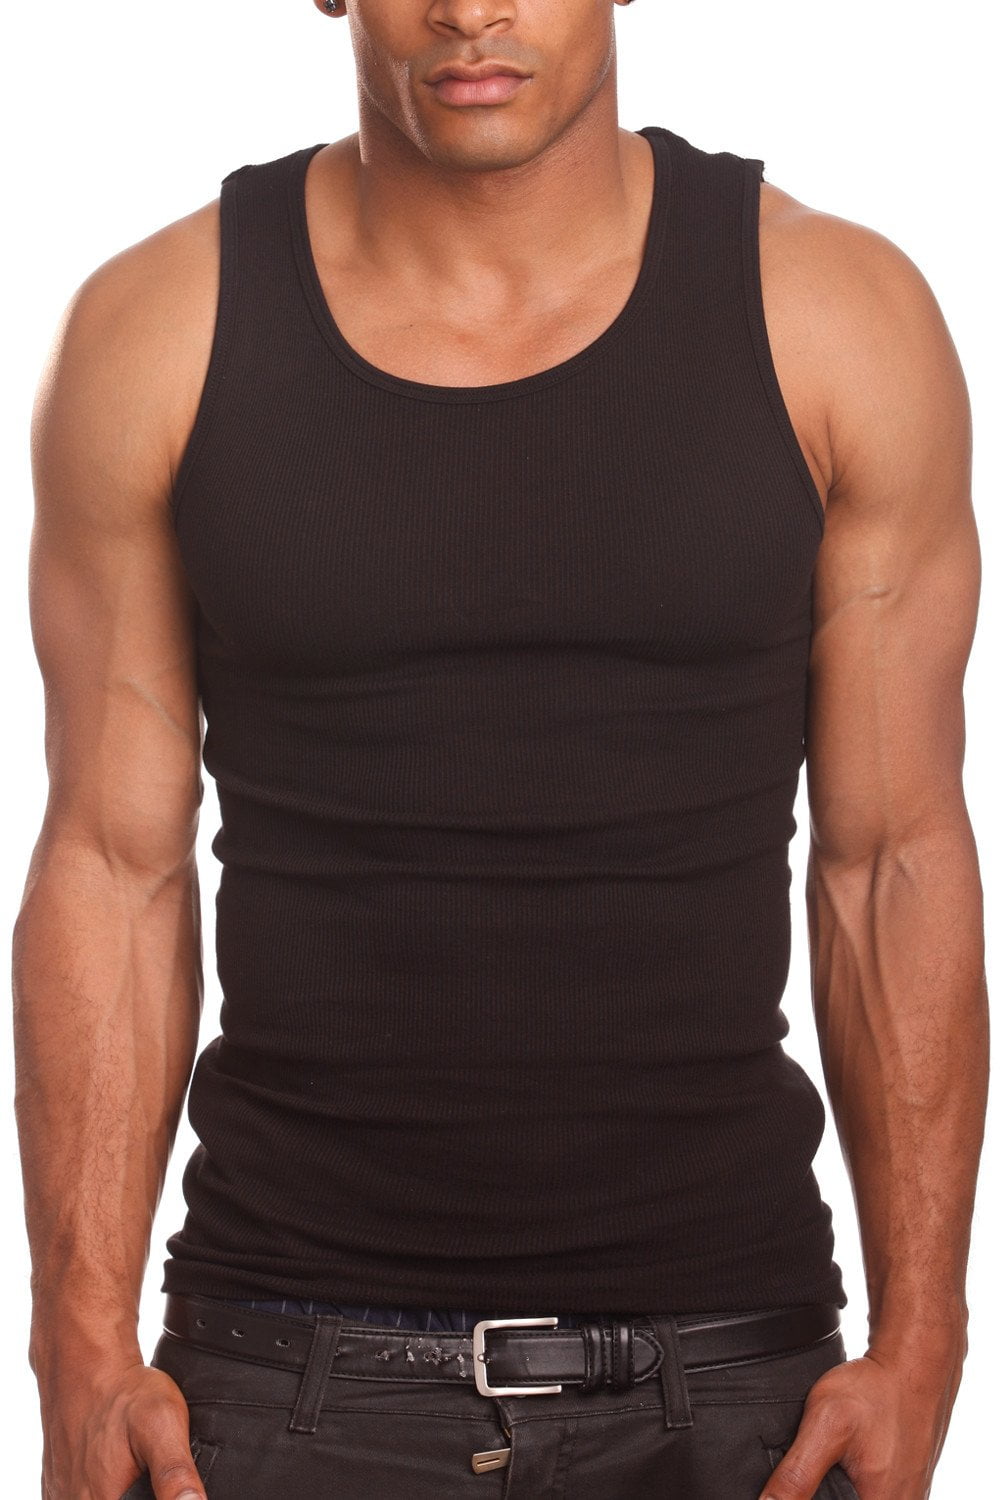 Men's 3 Pack Tank Top A Shirt–100% Cotton Ribbed Undershirt Tee